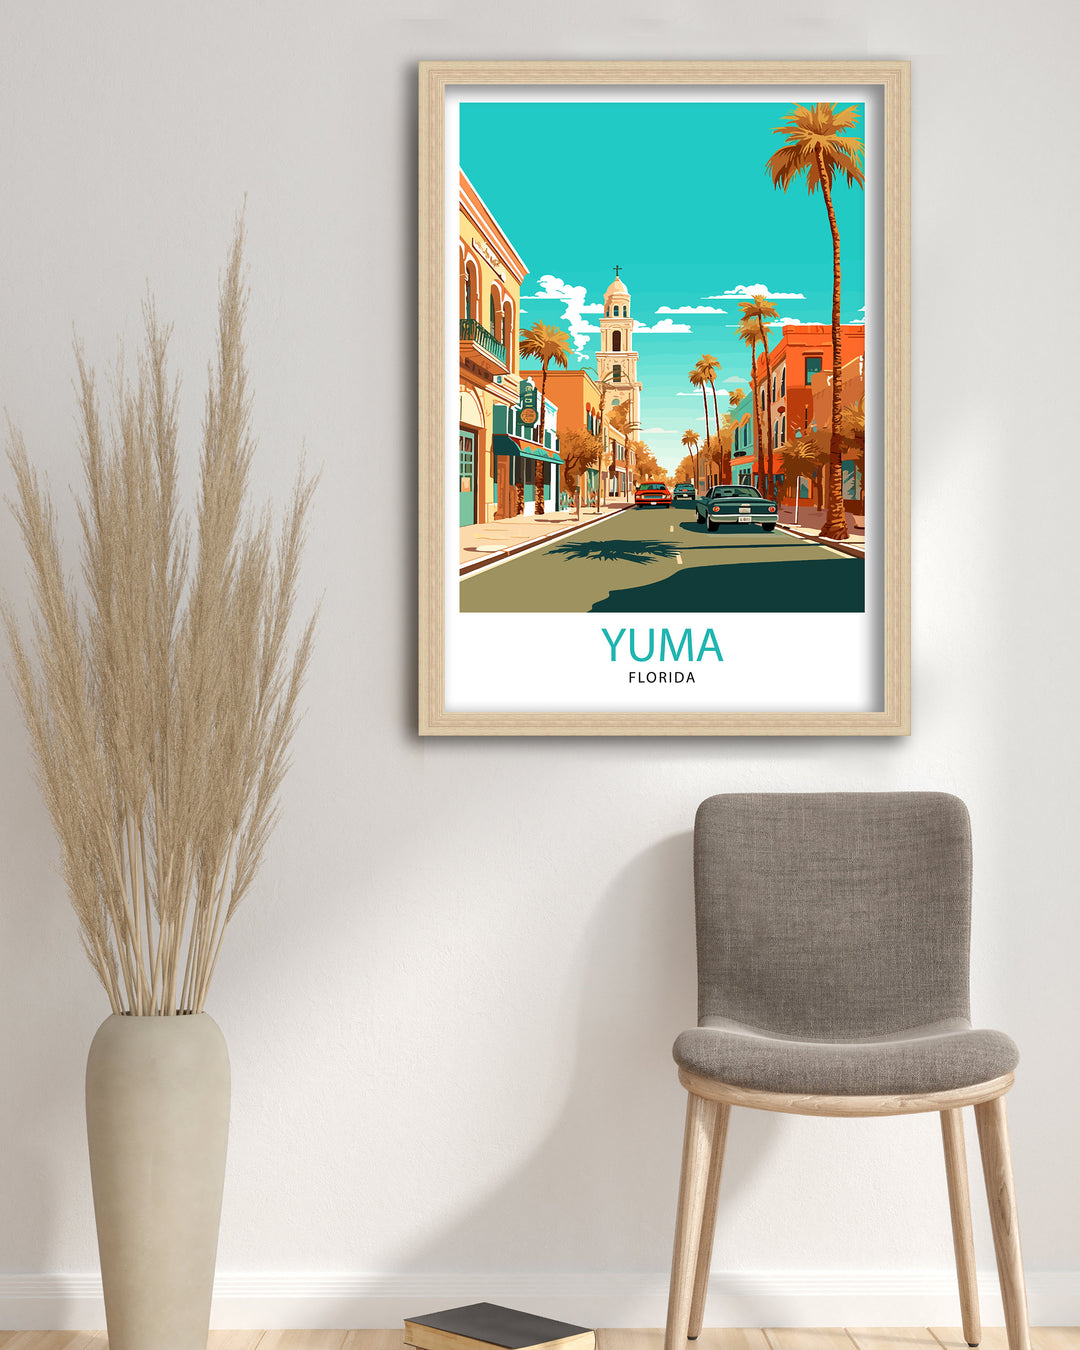 Yuma Arizona Travel Poster Yuma Wall Art Yuma Home Decor Yuma Illustration Travel Poster Gift For Yuma Arizona Home Decor